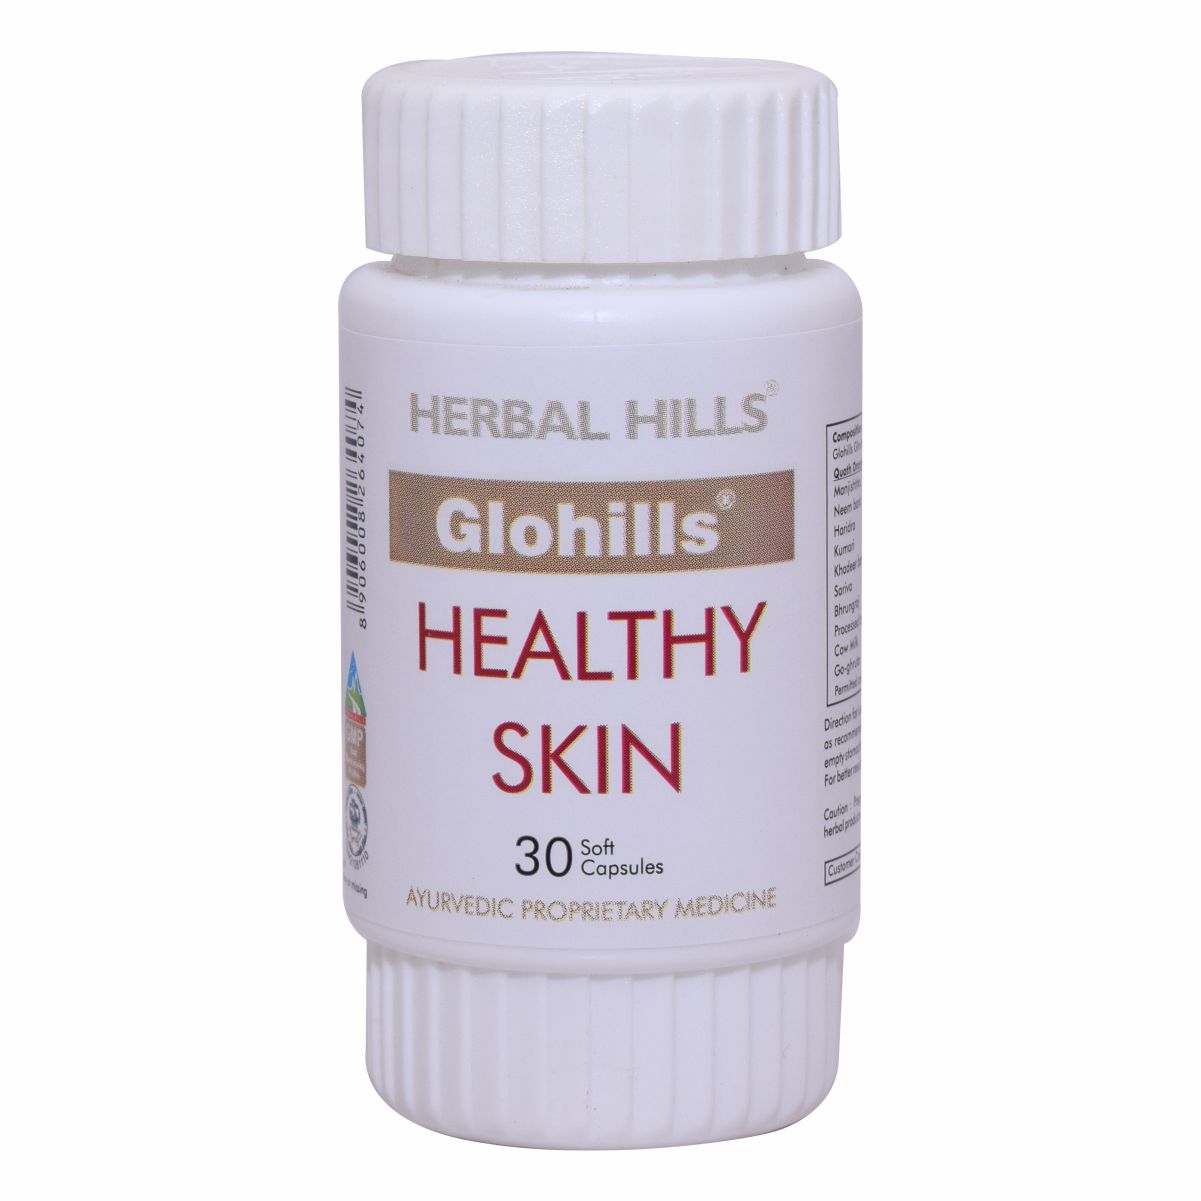 Buy Herbal Hills Glohills at Best Price Online